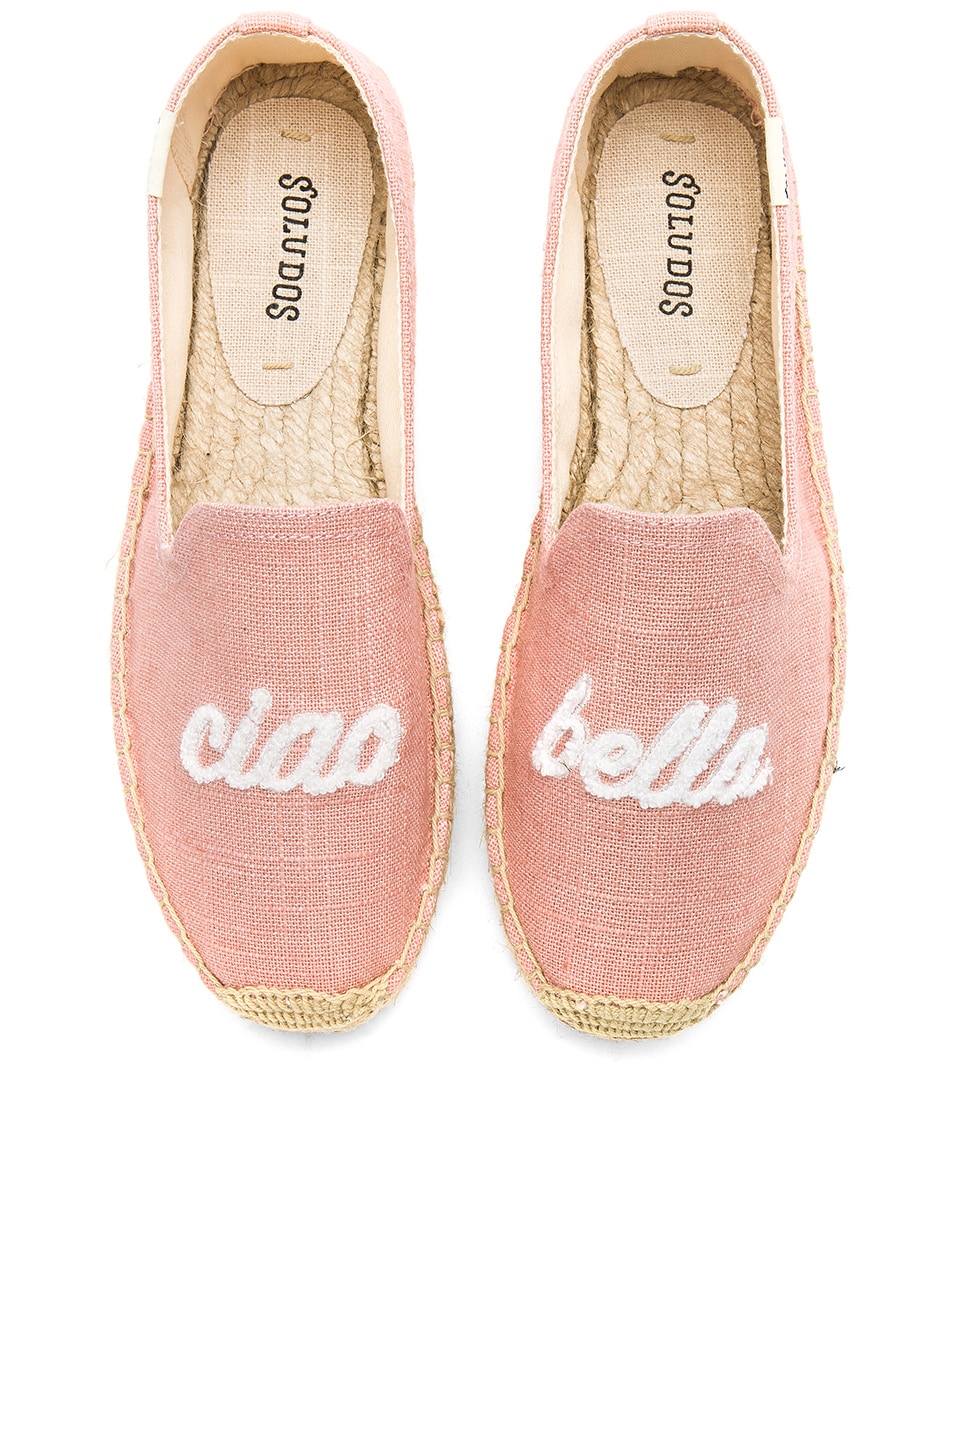 soludos ciao bella smoking slippers